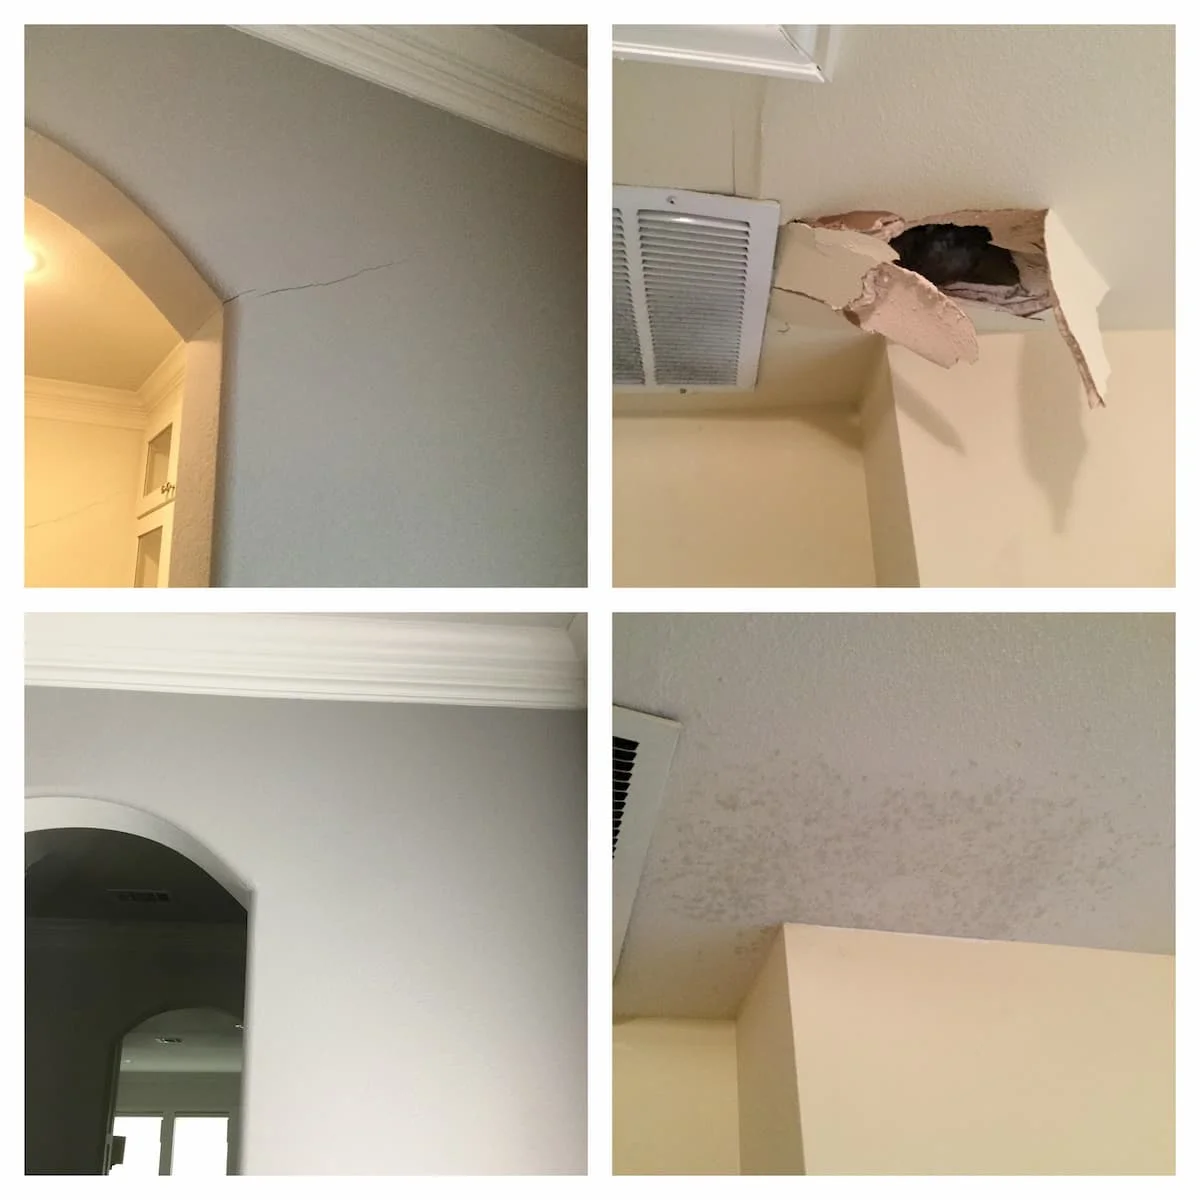 Addison Handyman drywall repair